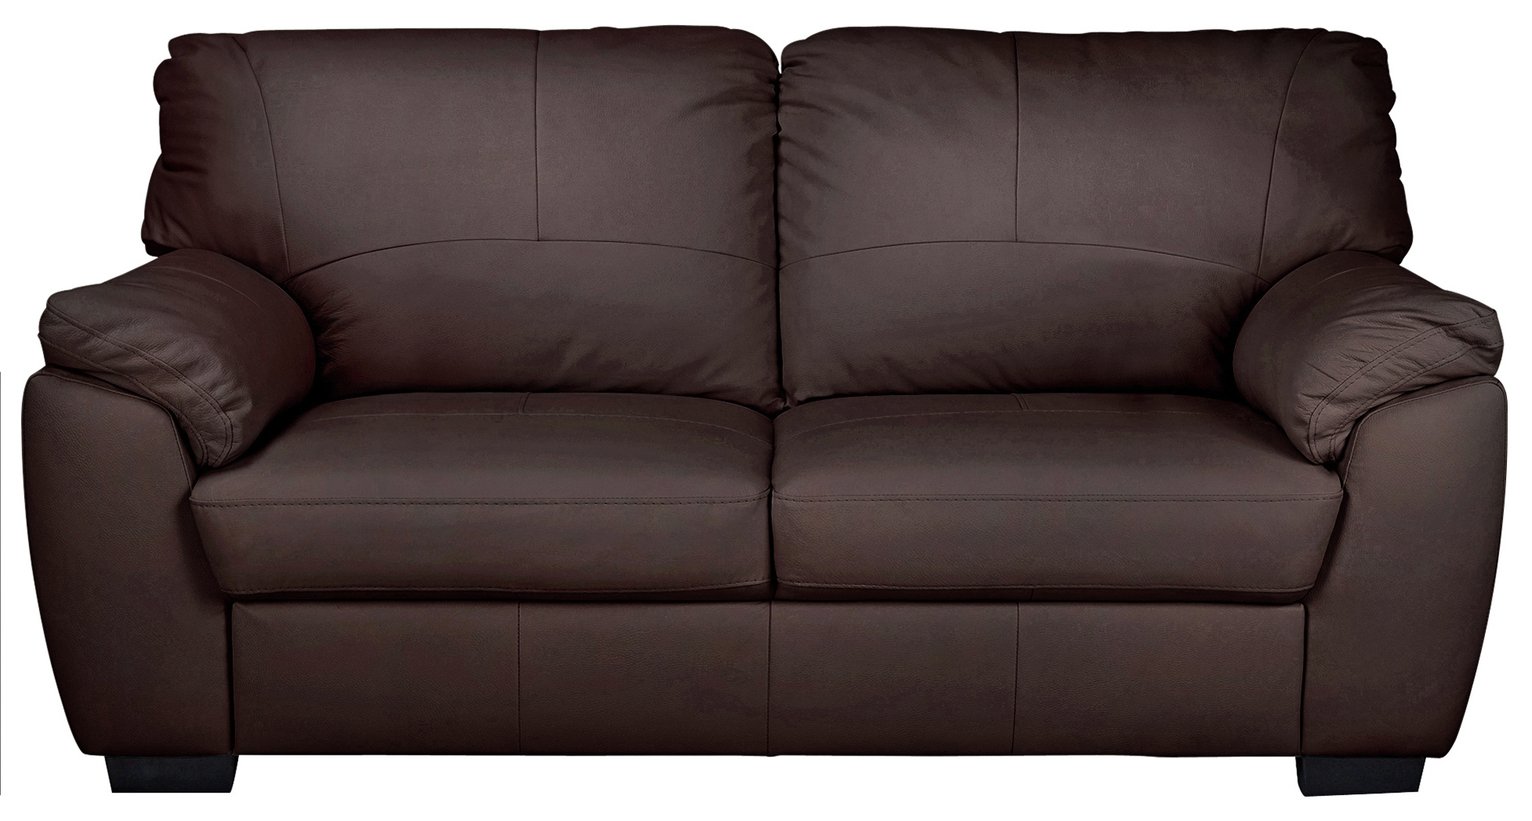 Argos Home Milano 3 Seater Leather Sofa - Chocolate